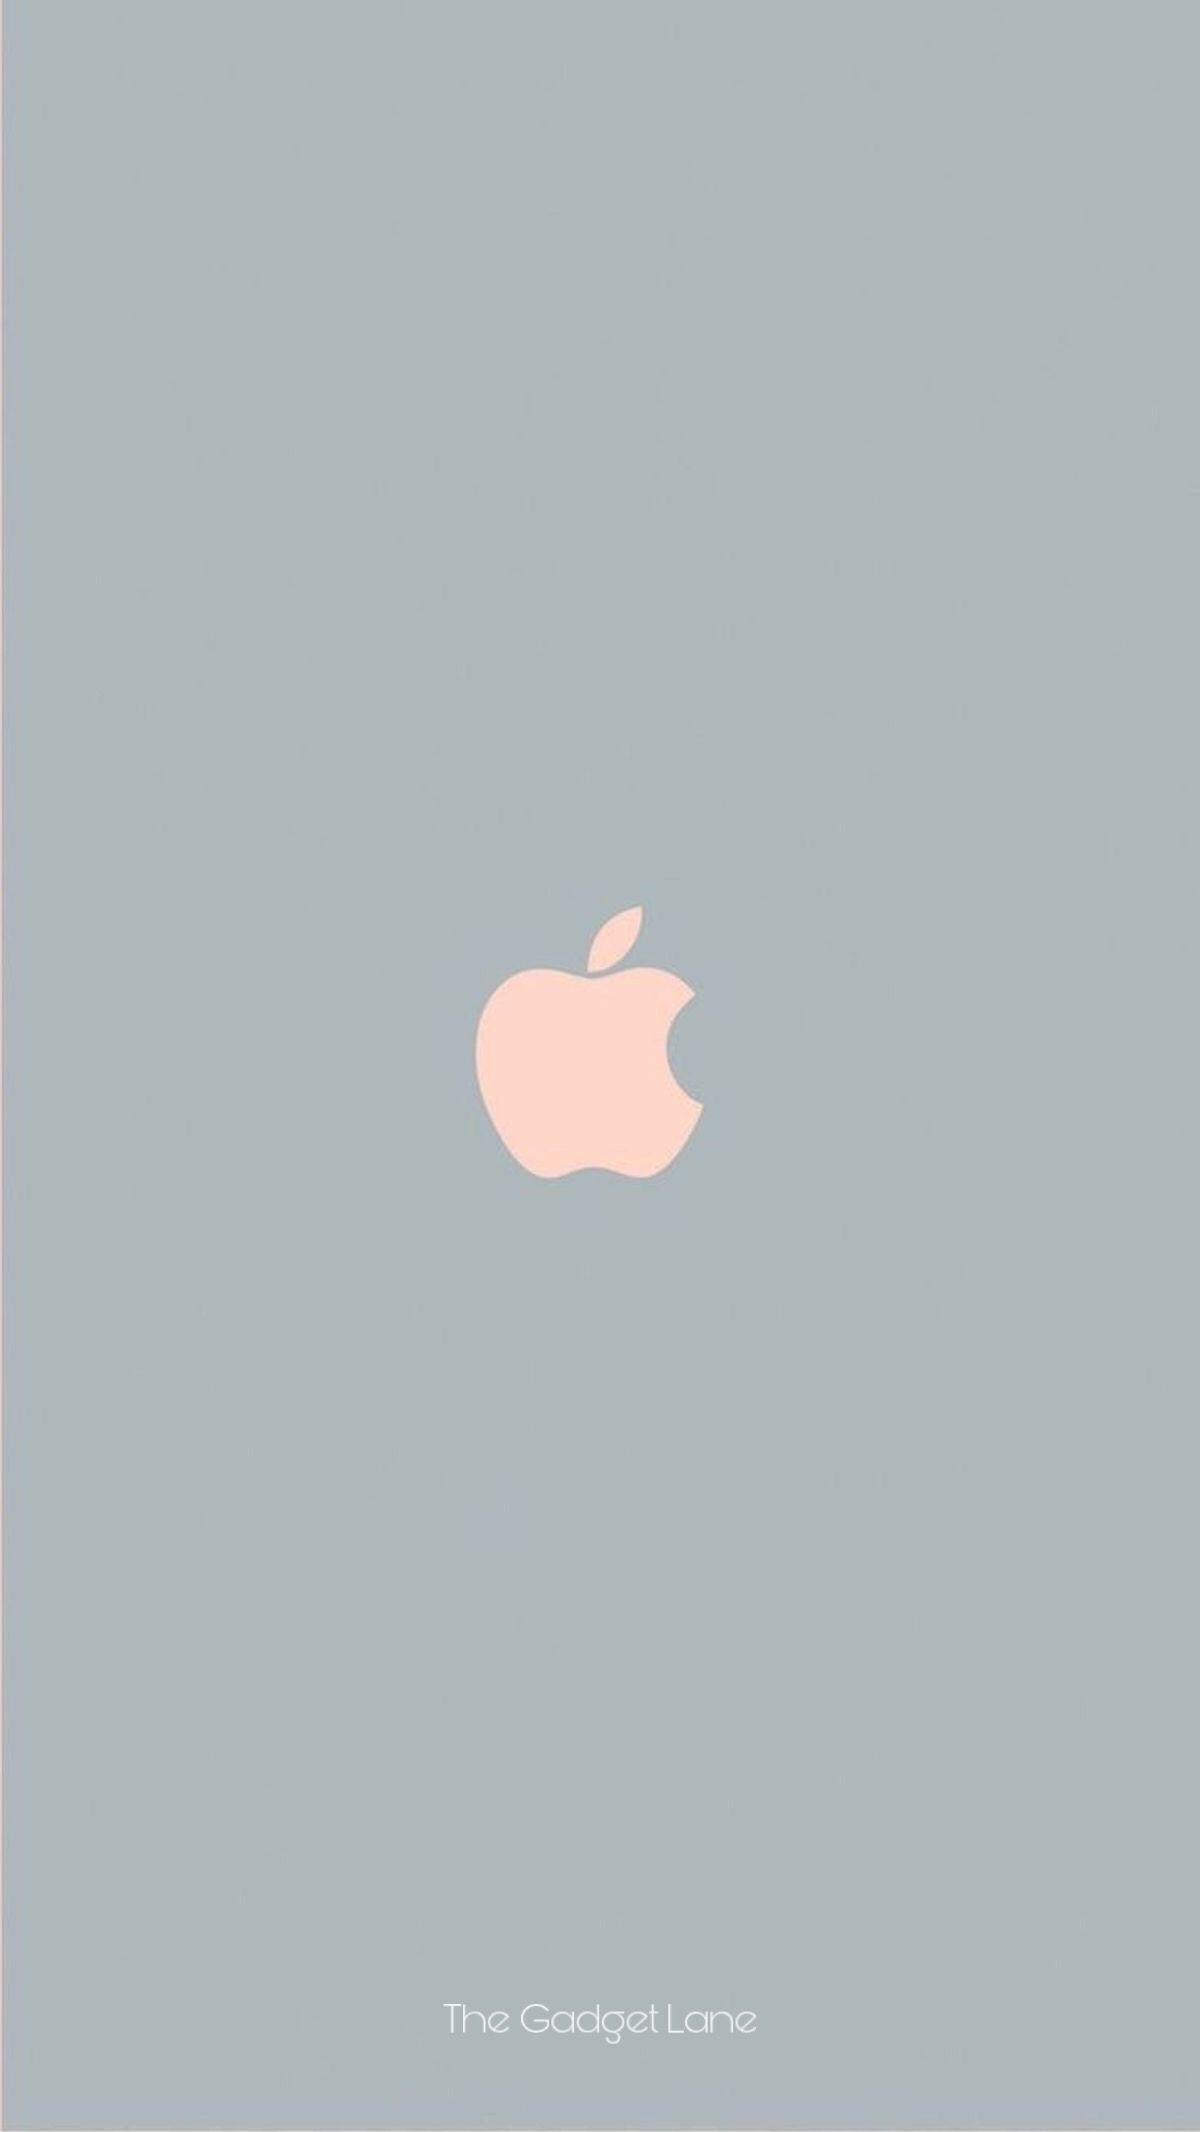 Apple. iPhone. Wallpaper. iPad wallpaper, iPhone homescreen wallpaper, Apple logo wallpaper